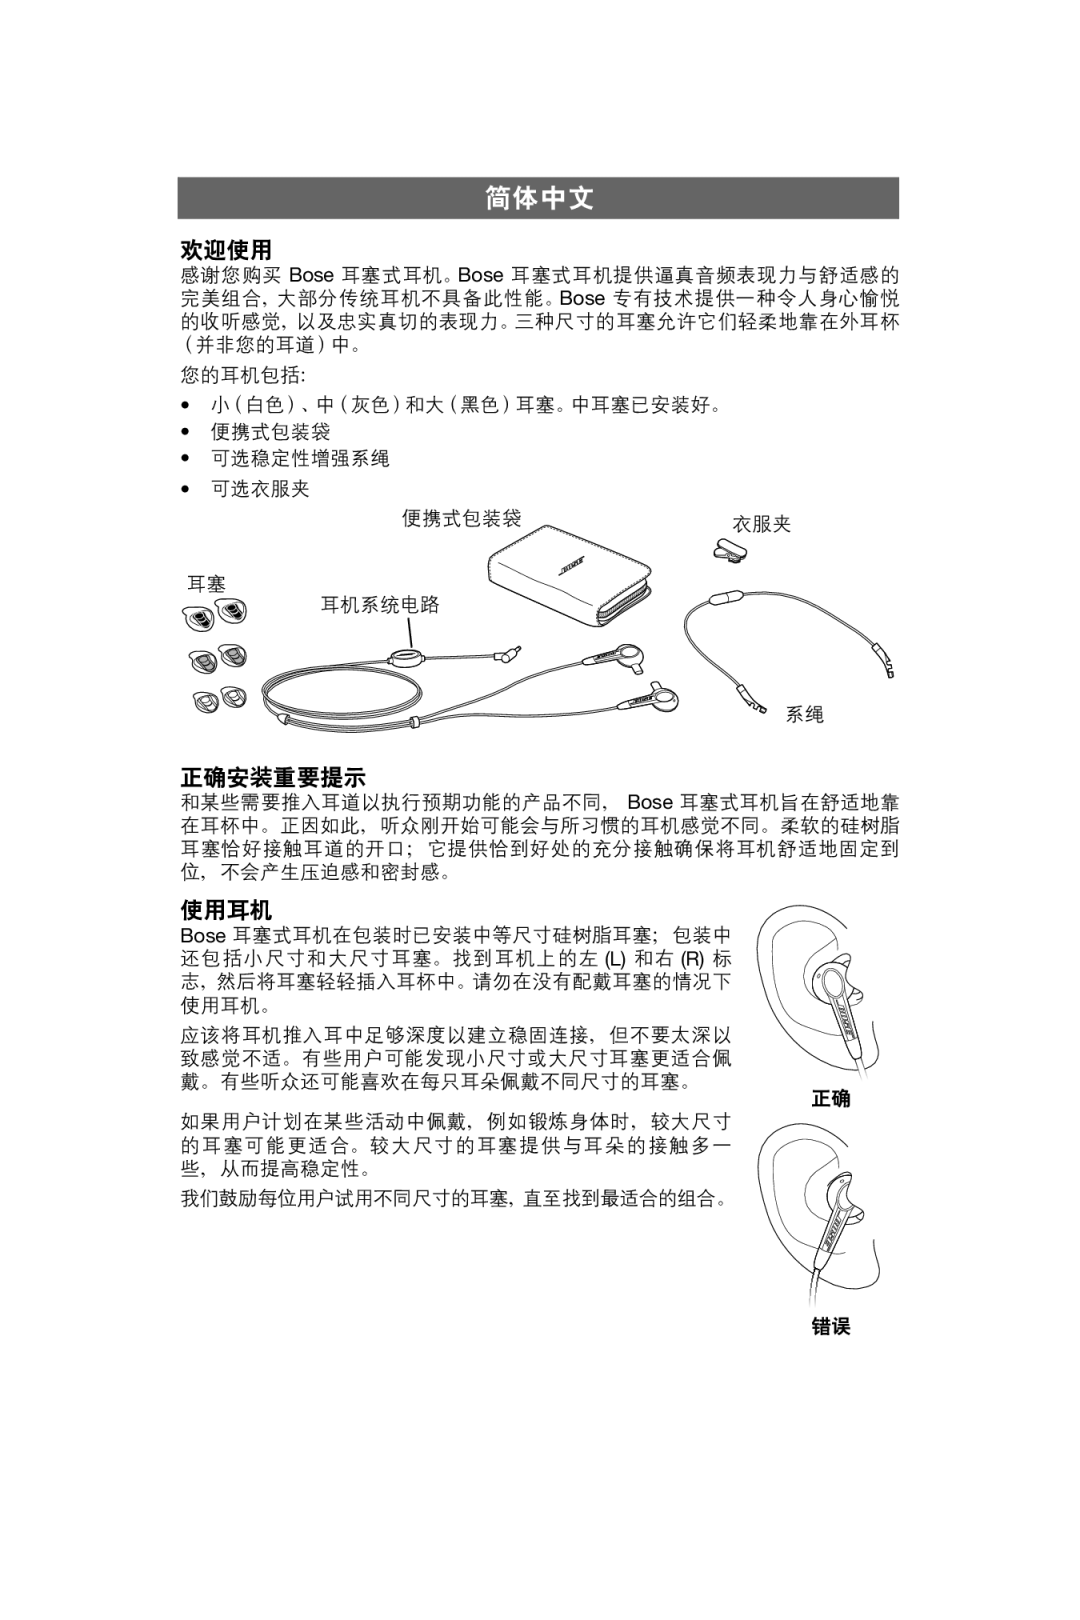 Bose In-Ear Headphones manual 简体中文, 欢迎使用, 正确安装重要提示, 使用耳机 